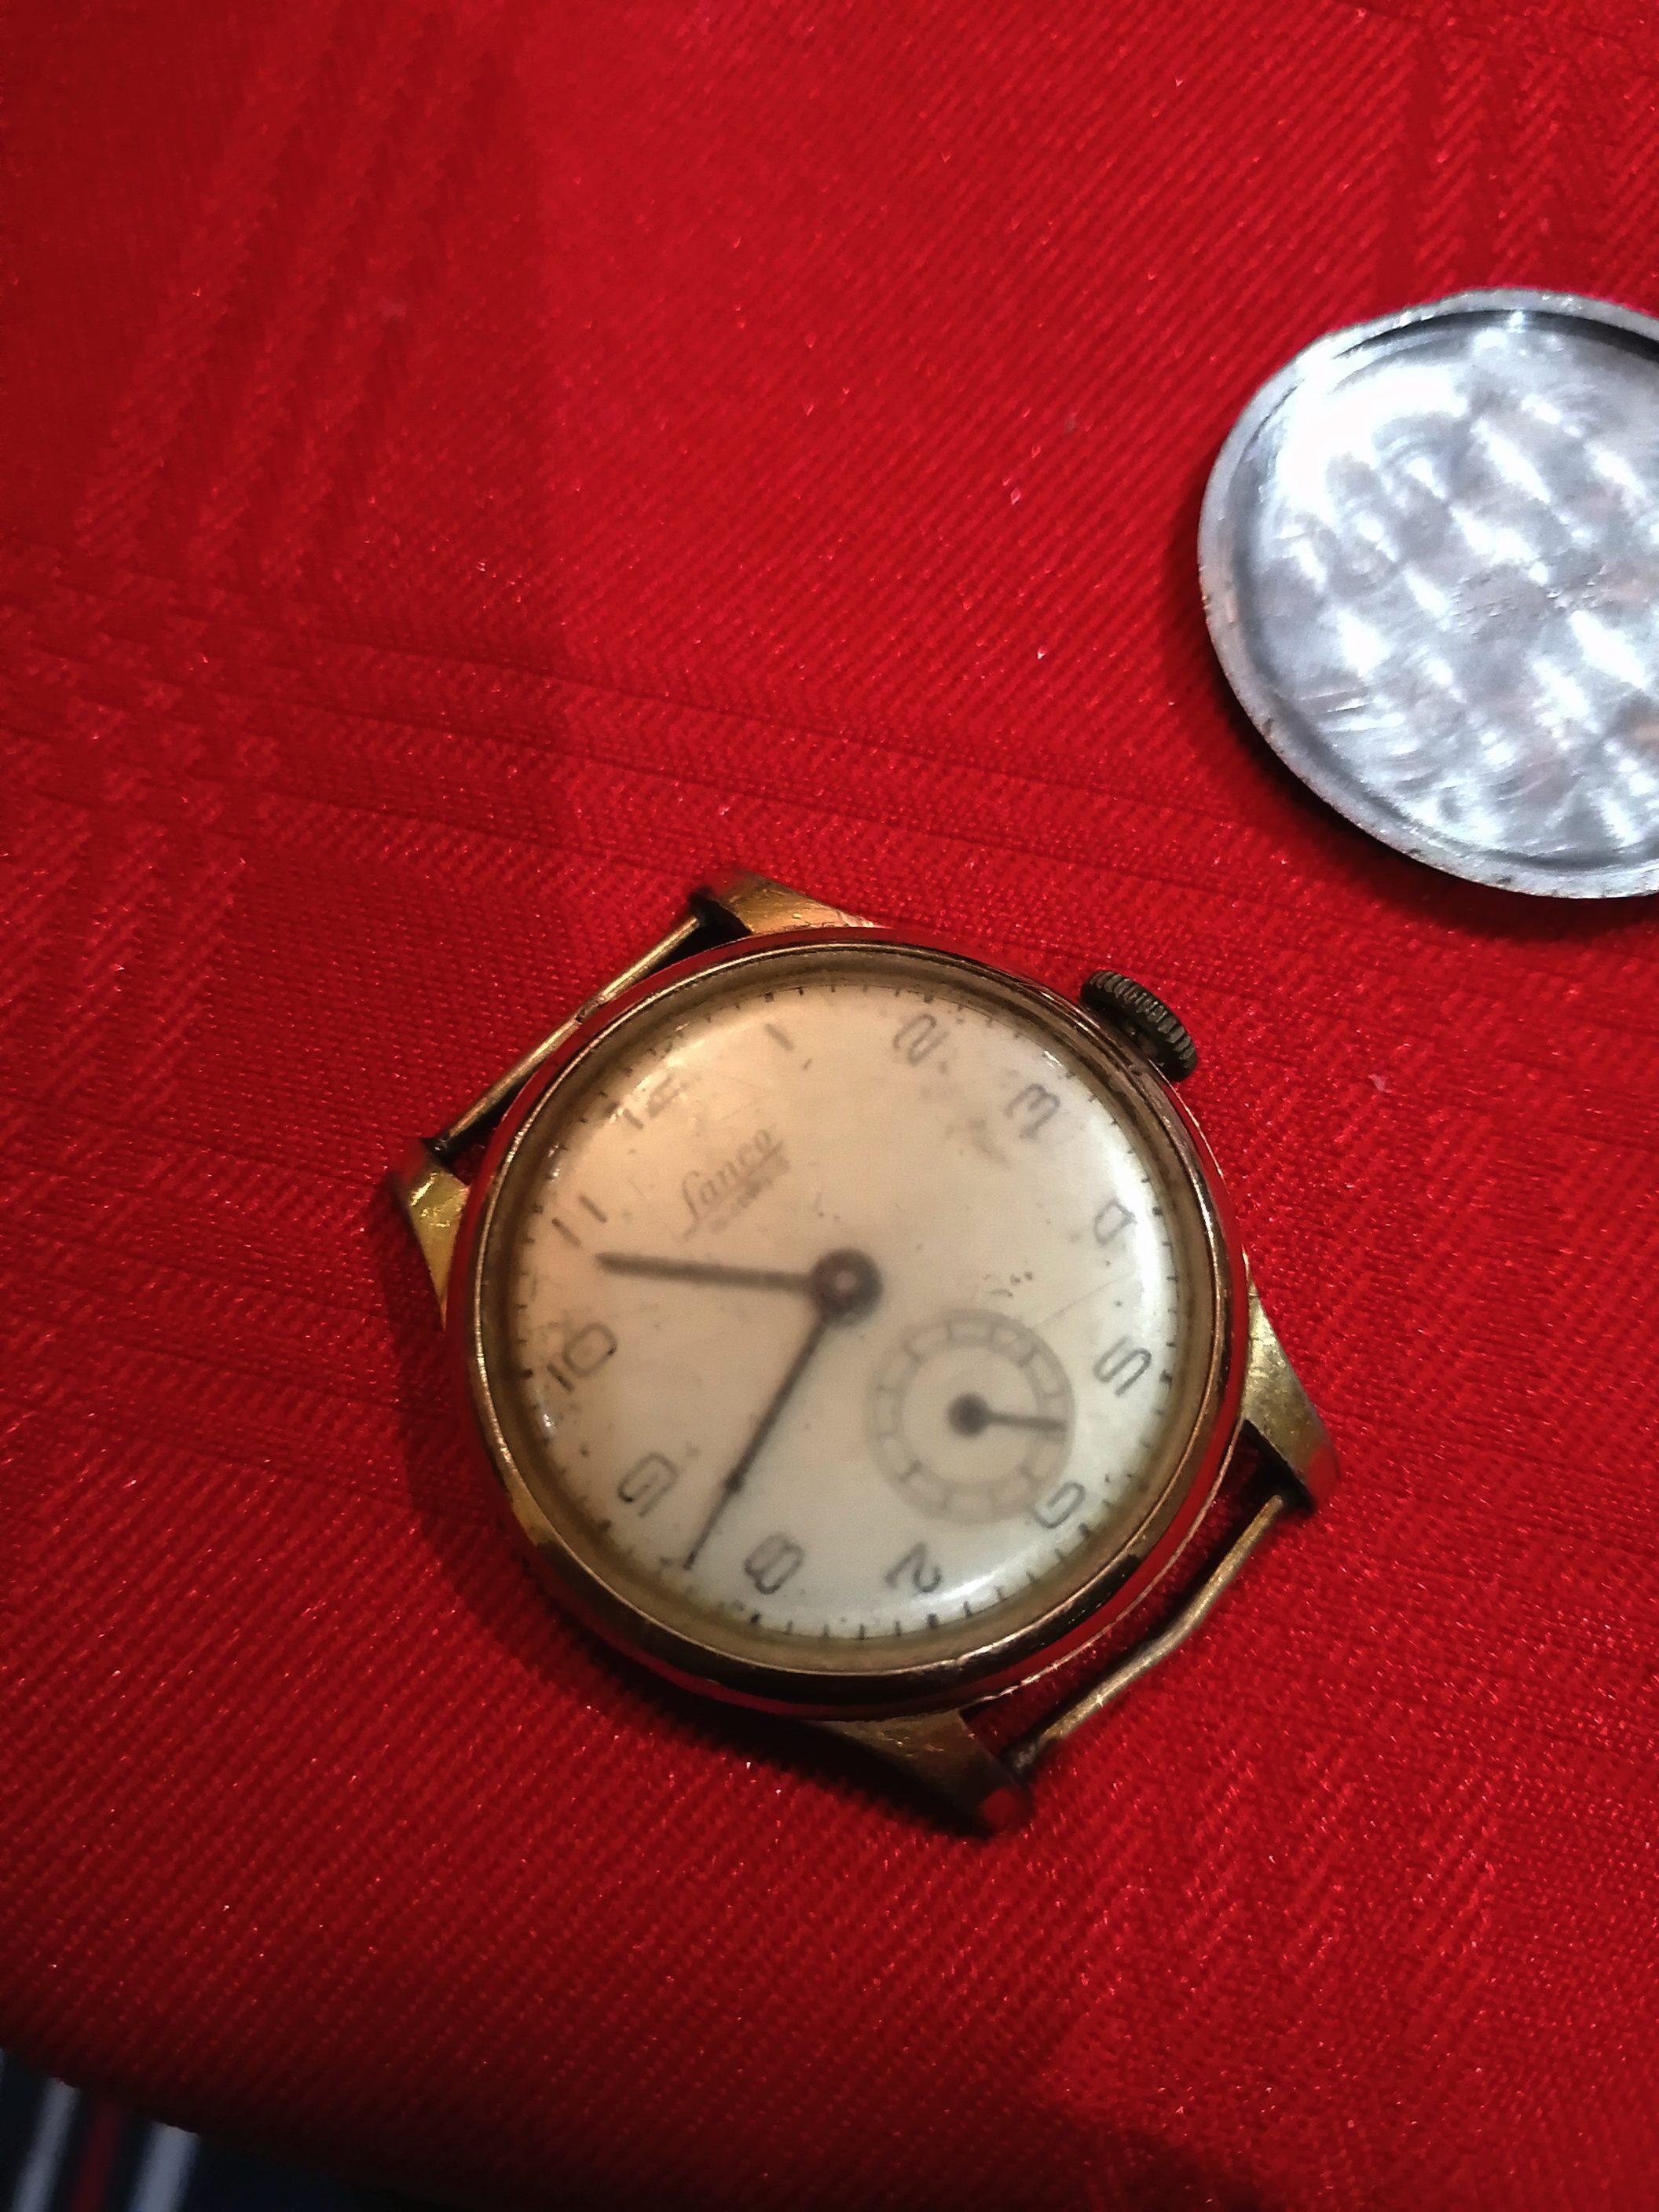 Lanco 50's 15 Rubis / 15 Jewels - Watch Repairs Help & Advice - Watch ...